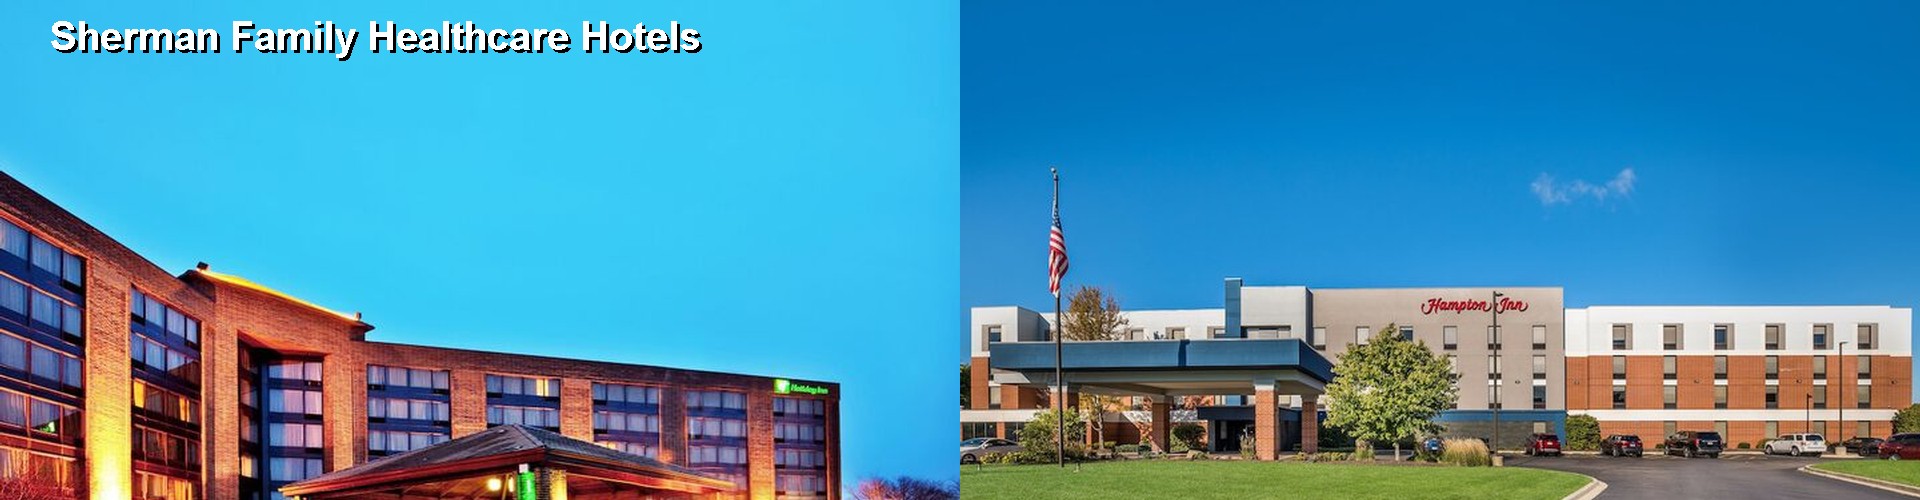 4 Best Hotels near Sherman Family Healthcare